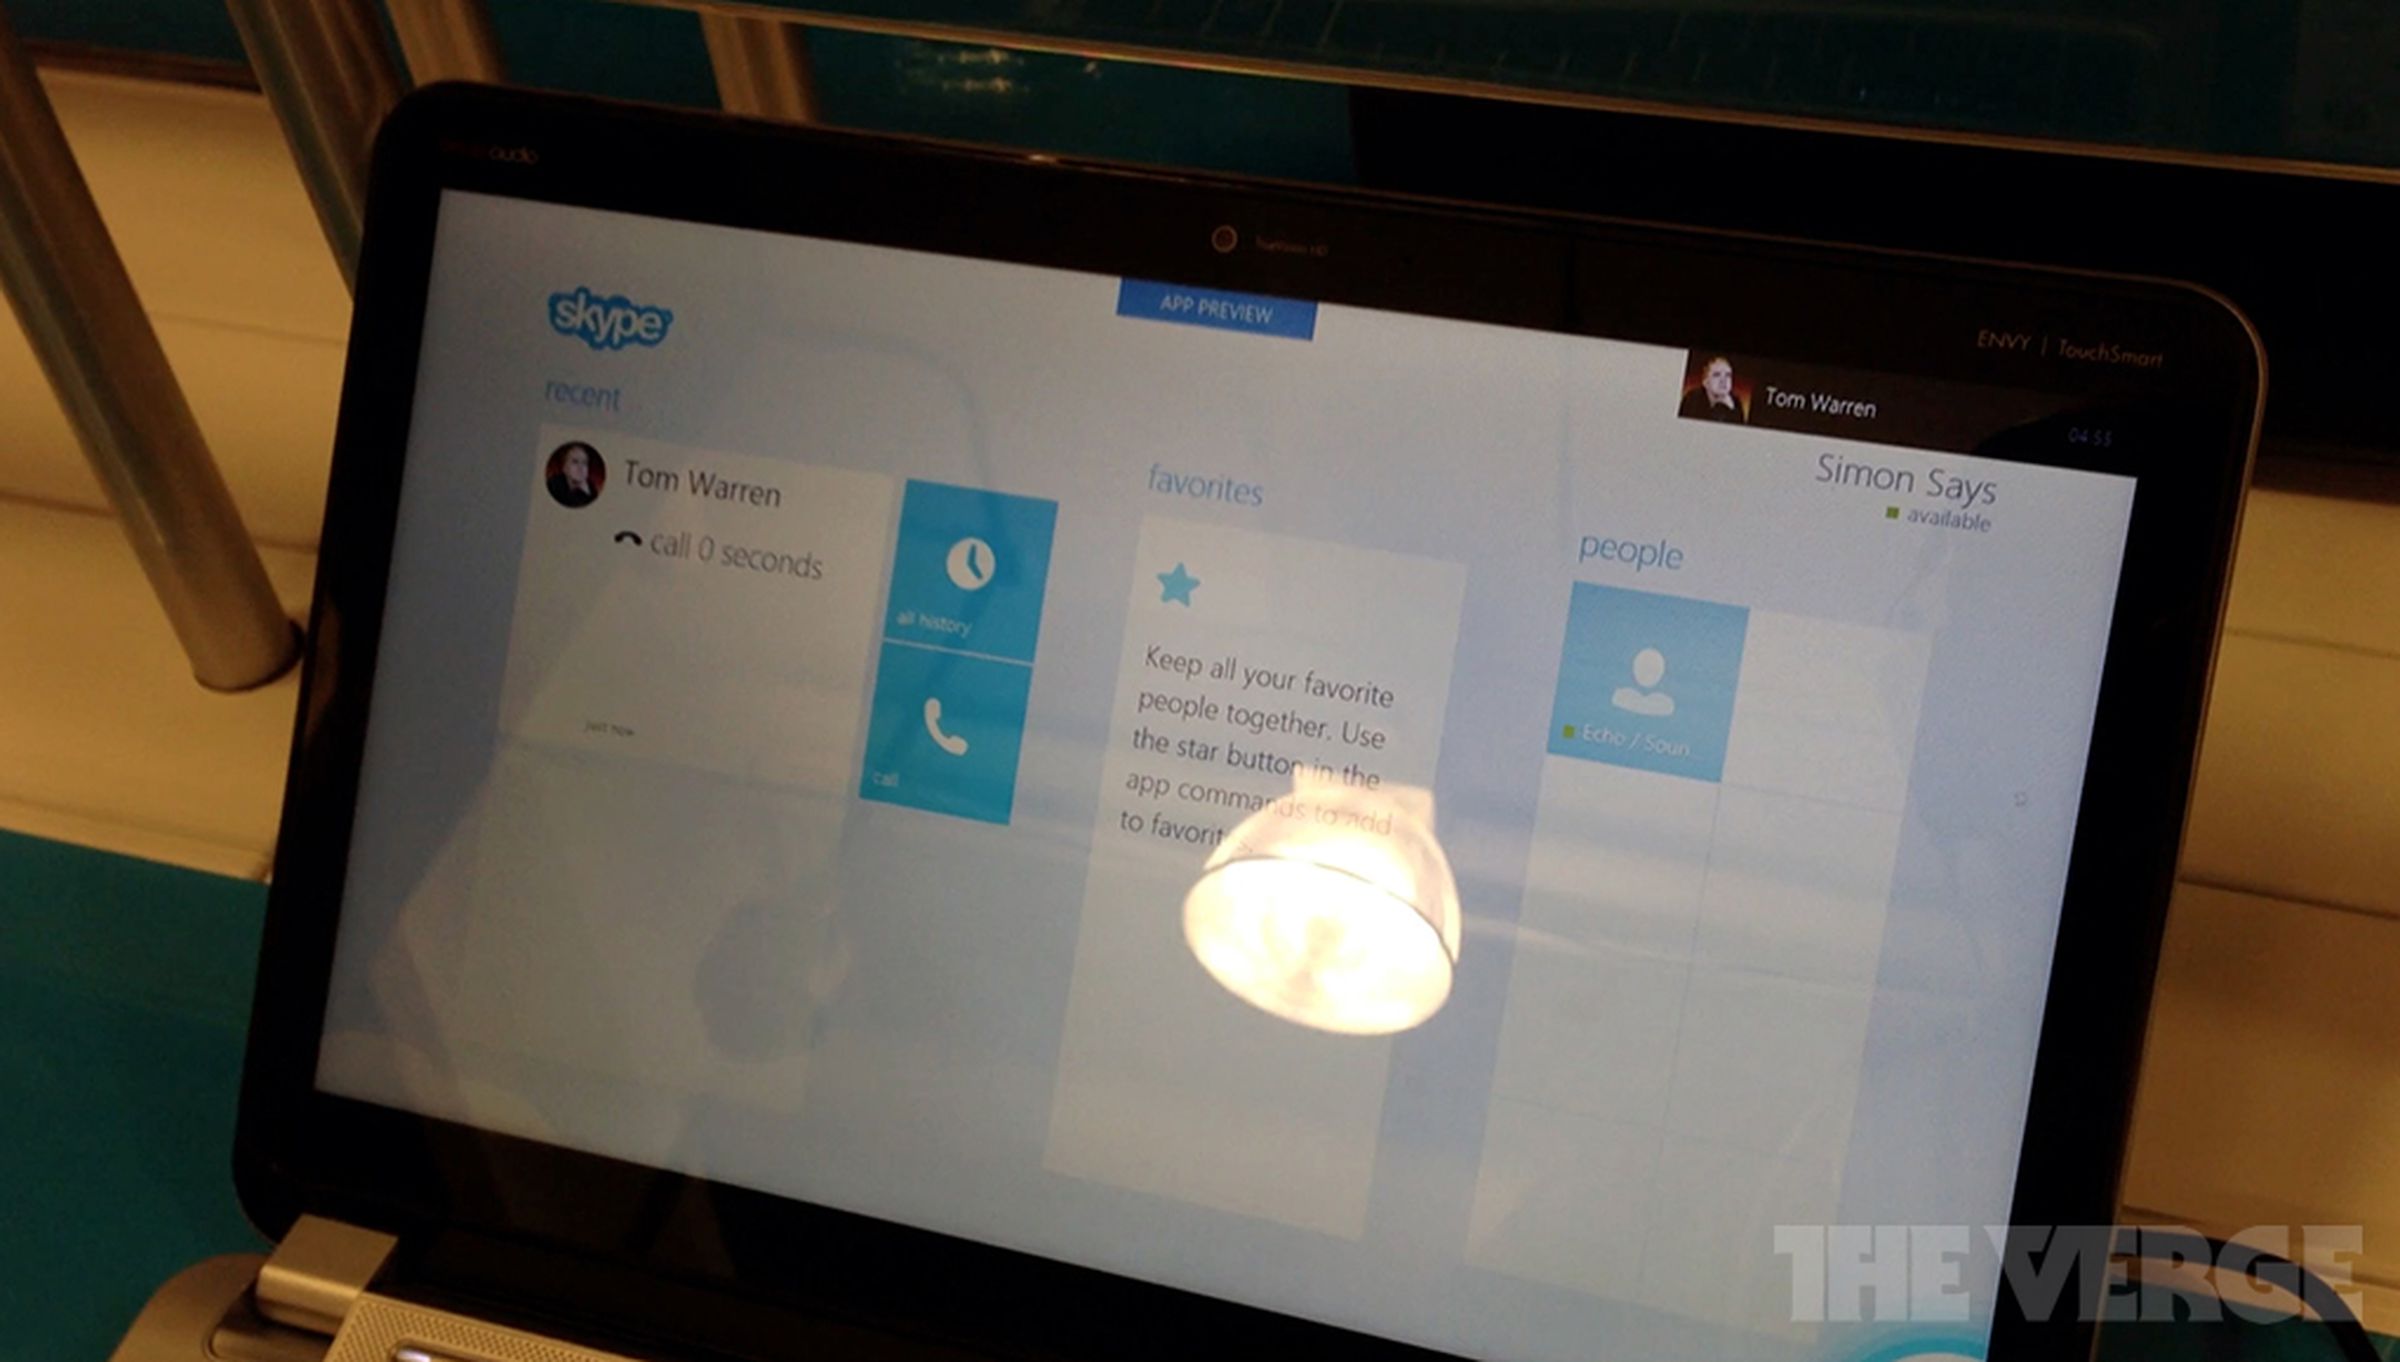 Skype and Netflix Windows 8 apps